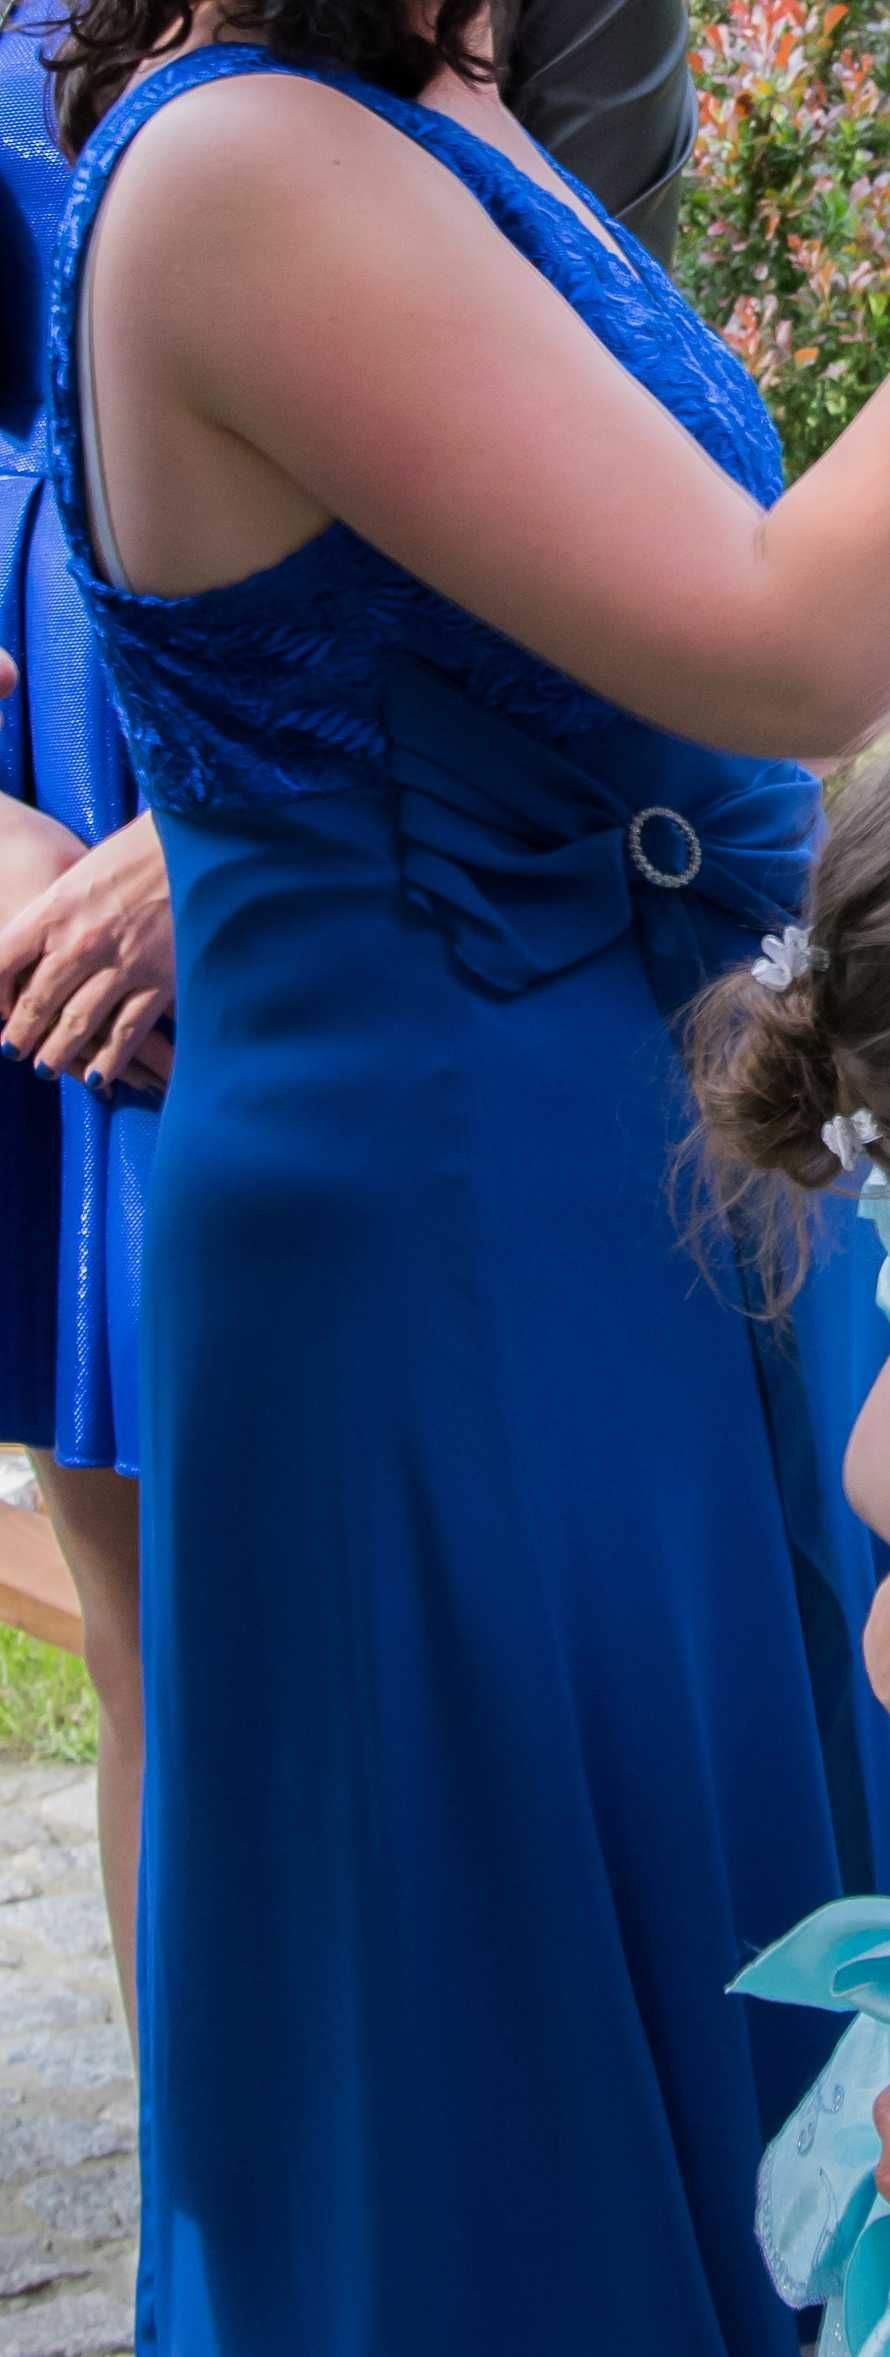 sukienka niebieska, tiul, rozmiar 44